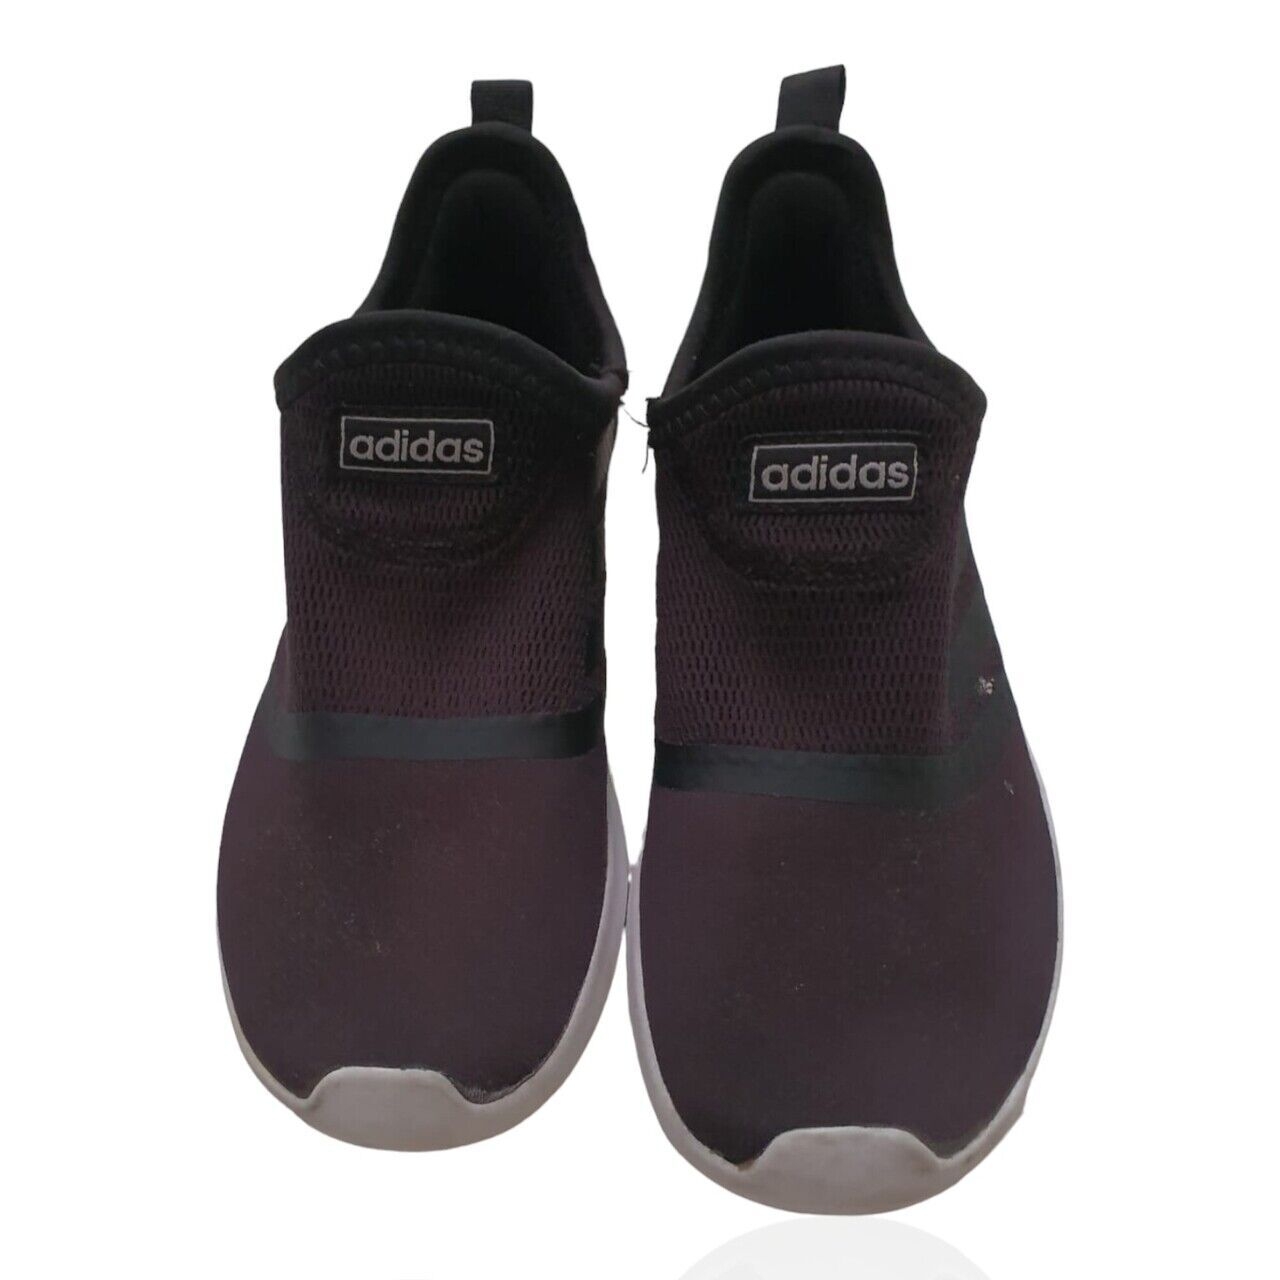 Adidas Lite Racer Slip-On Shoes